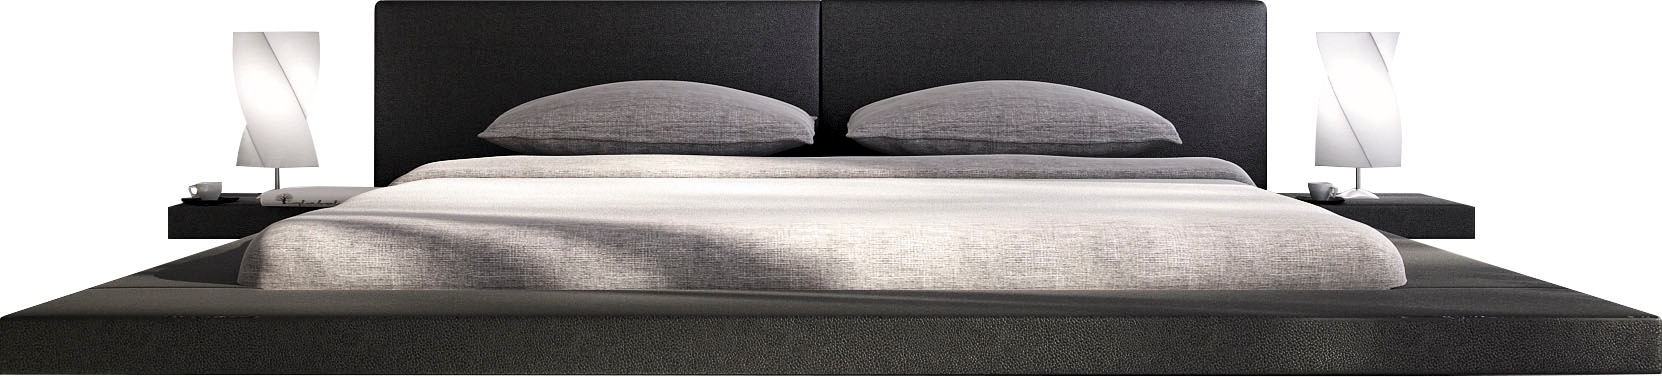 Polsterbett, Design Bett in moderner Optik, Lounge Bett inklusive Nachttisch